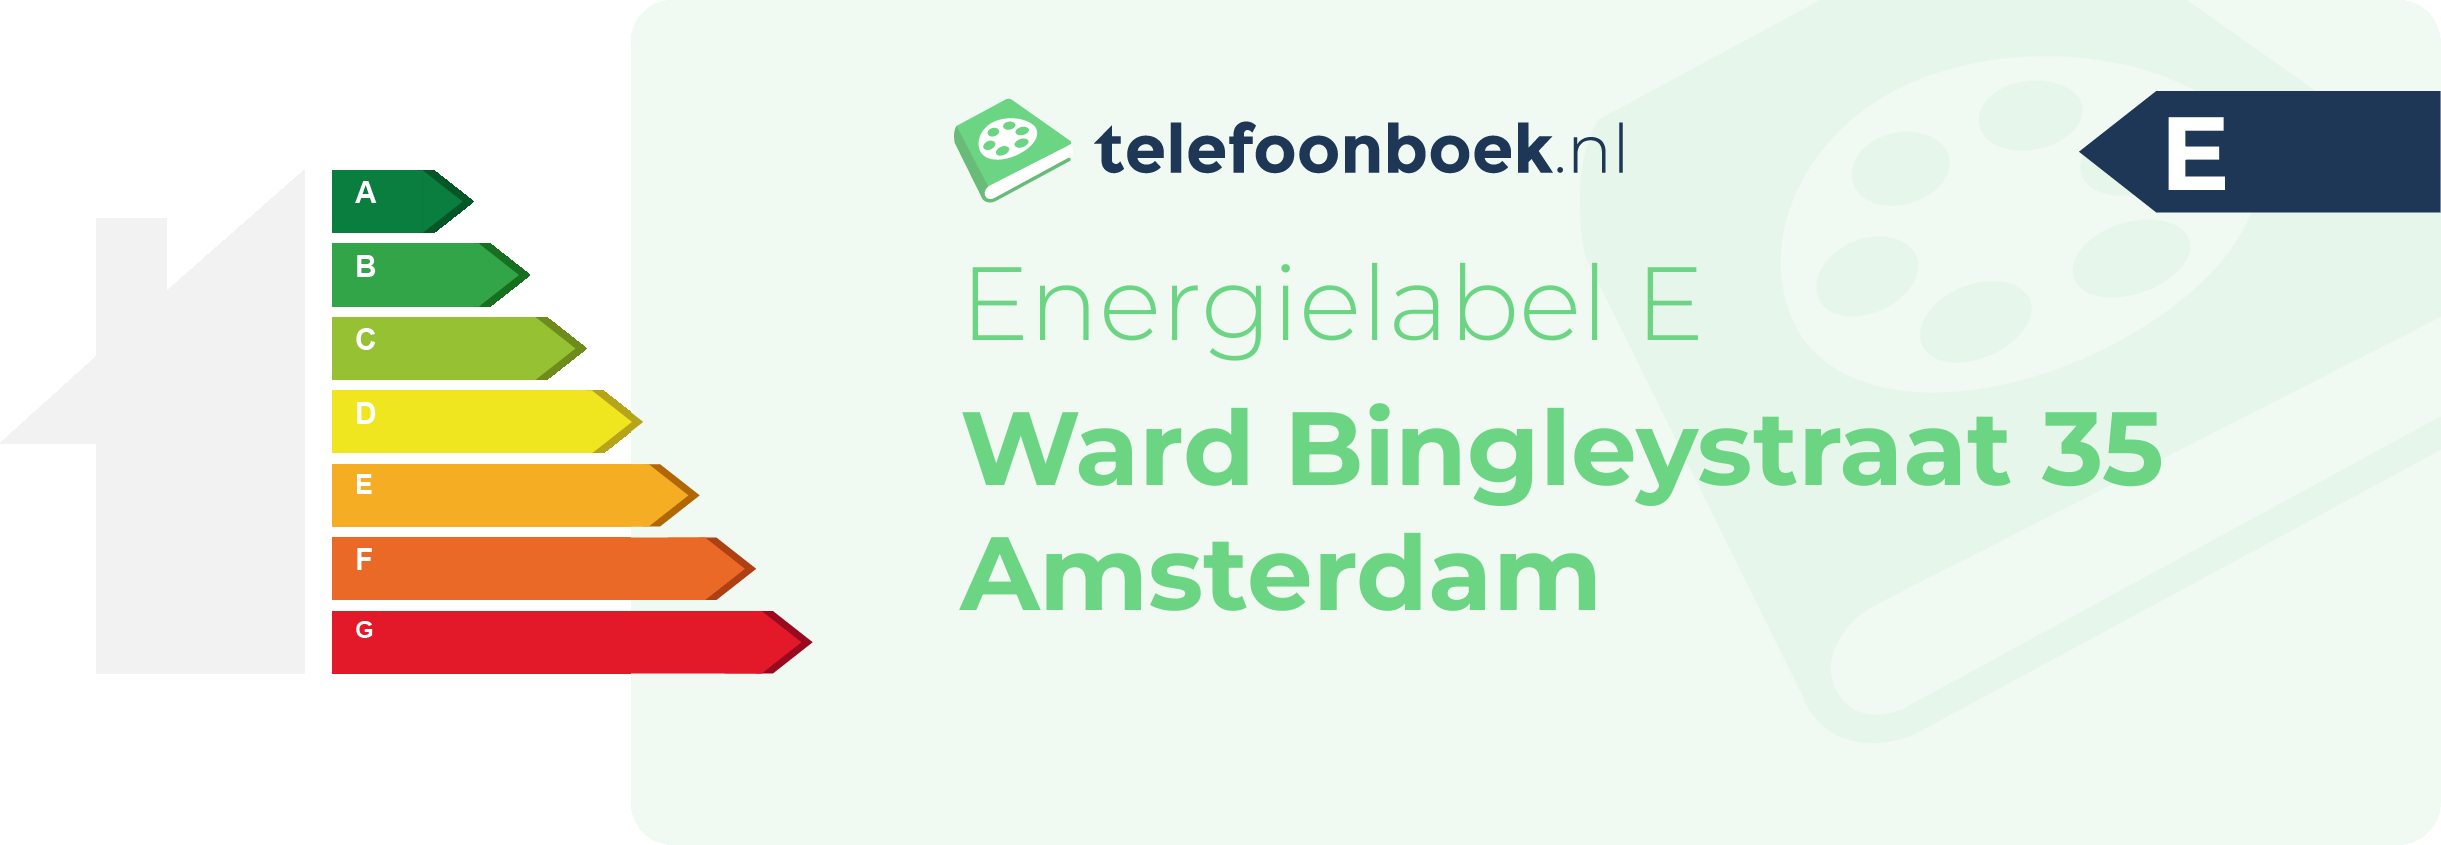 Energielabel Ward Bingleystraat 35 Amsterdam